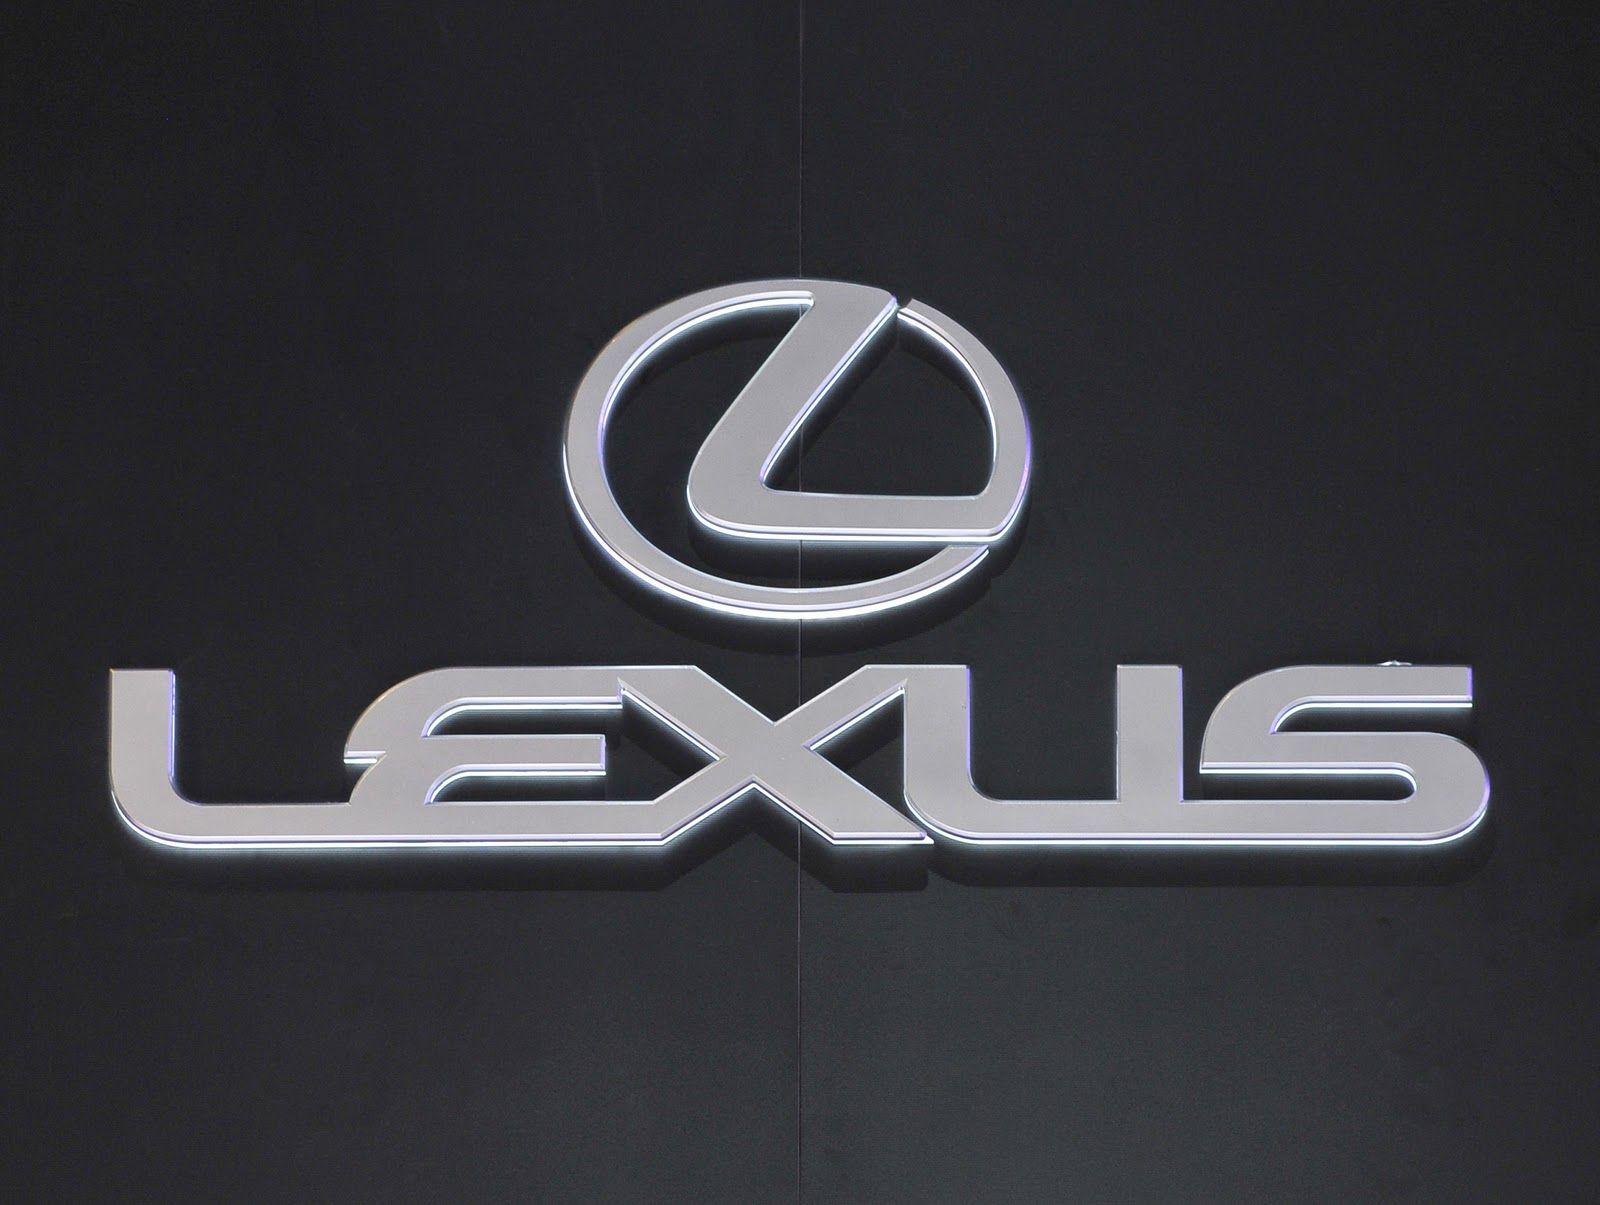 Black and Silver Car Logo - Lexus Logo, Lexus Car Symbol Meaning and History | Car Brand Names.com